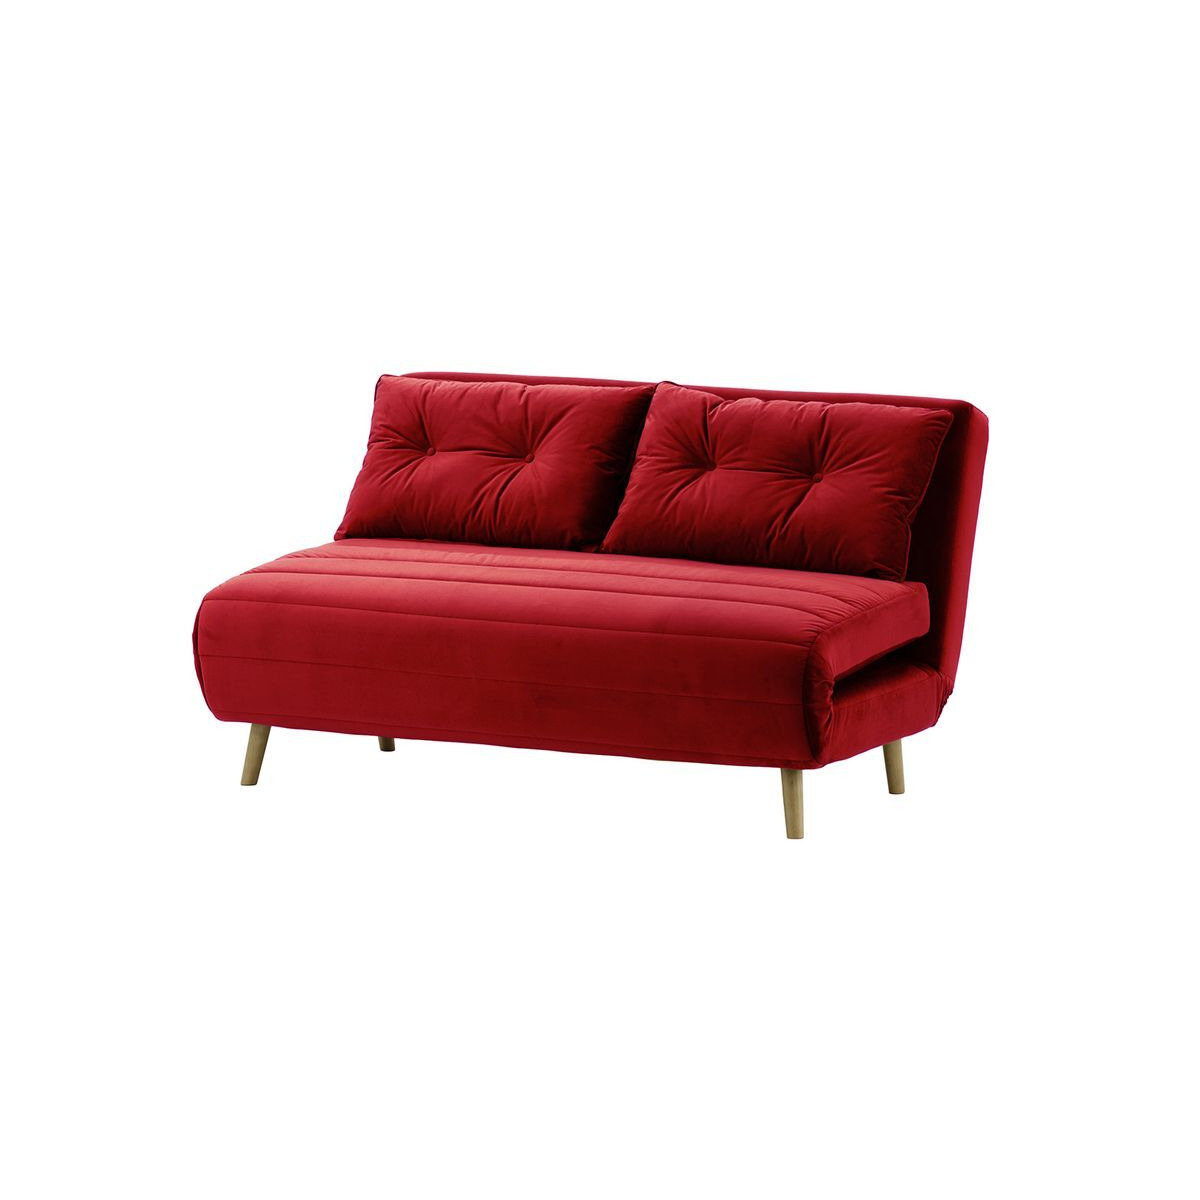 Flic Large Double Sofa Bed - width 142 cm, navy blue, Leg colour: wax black - image 1